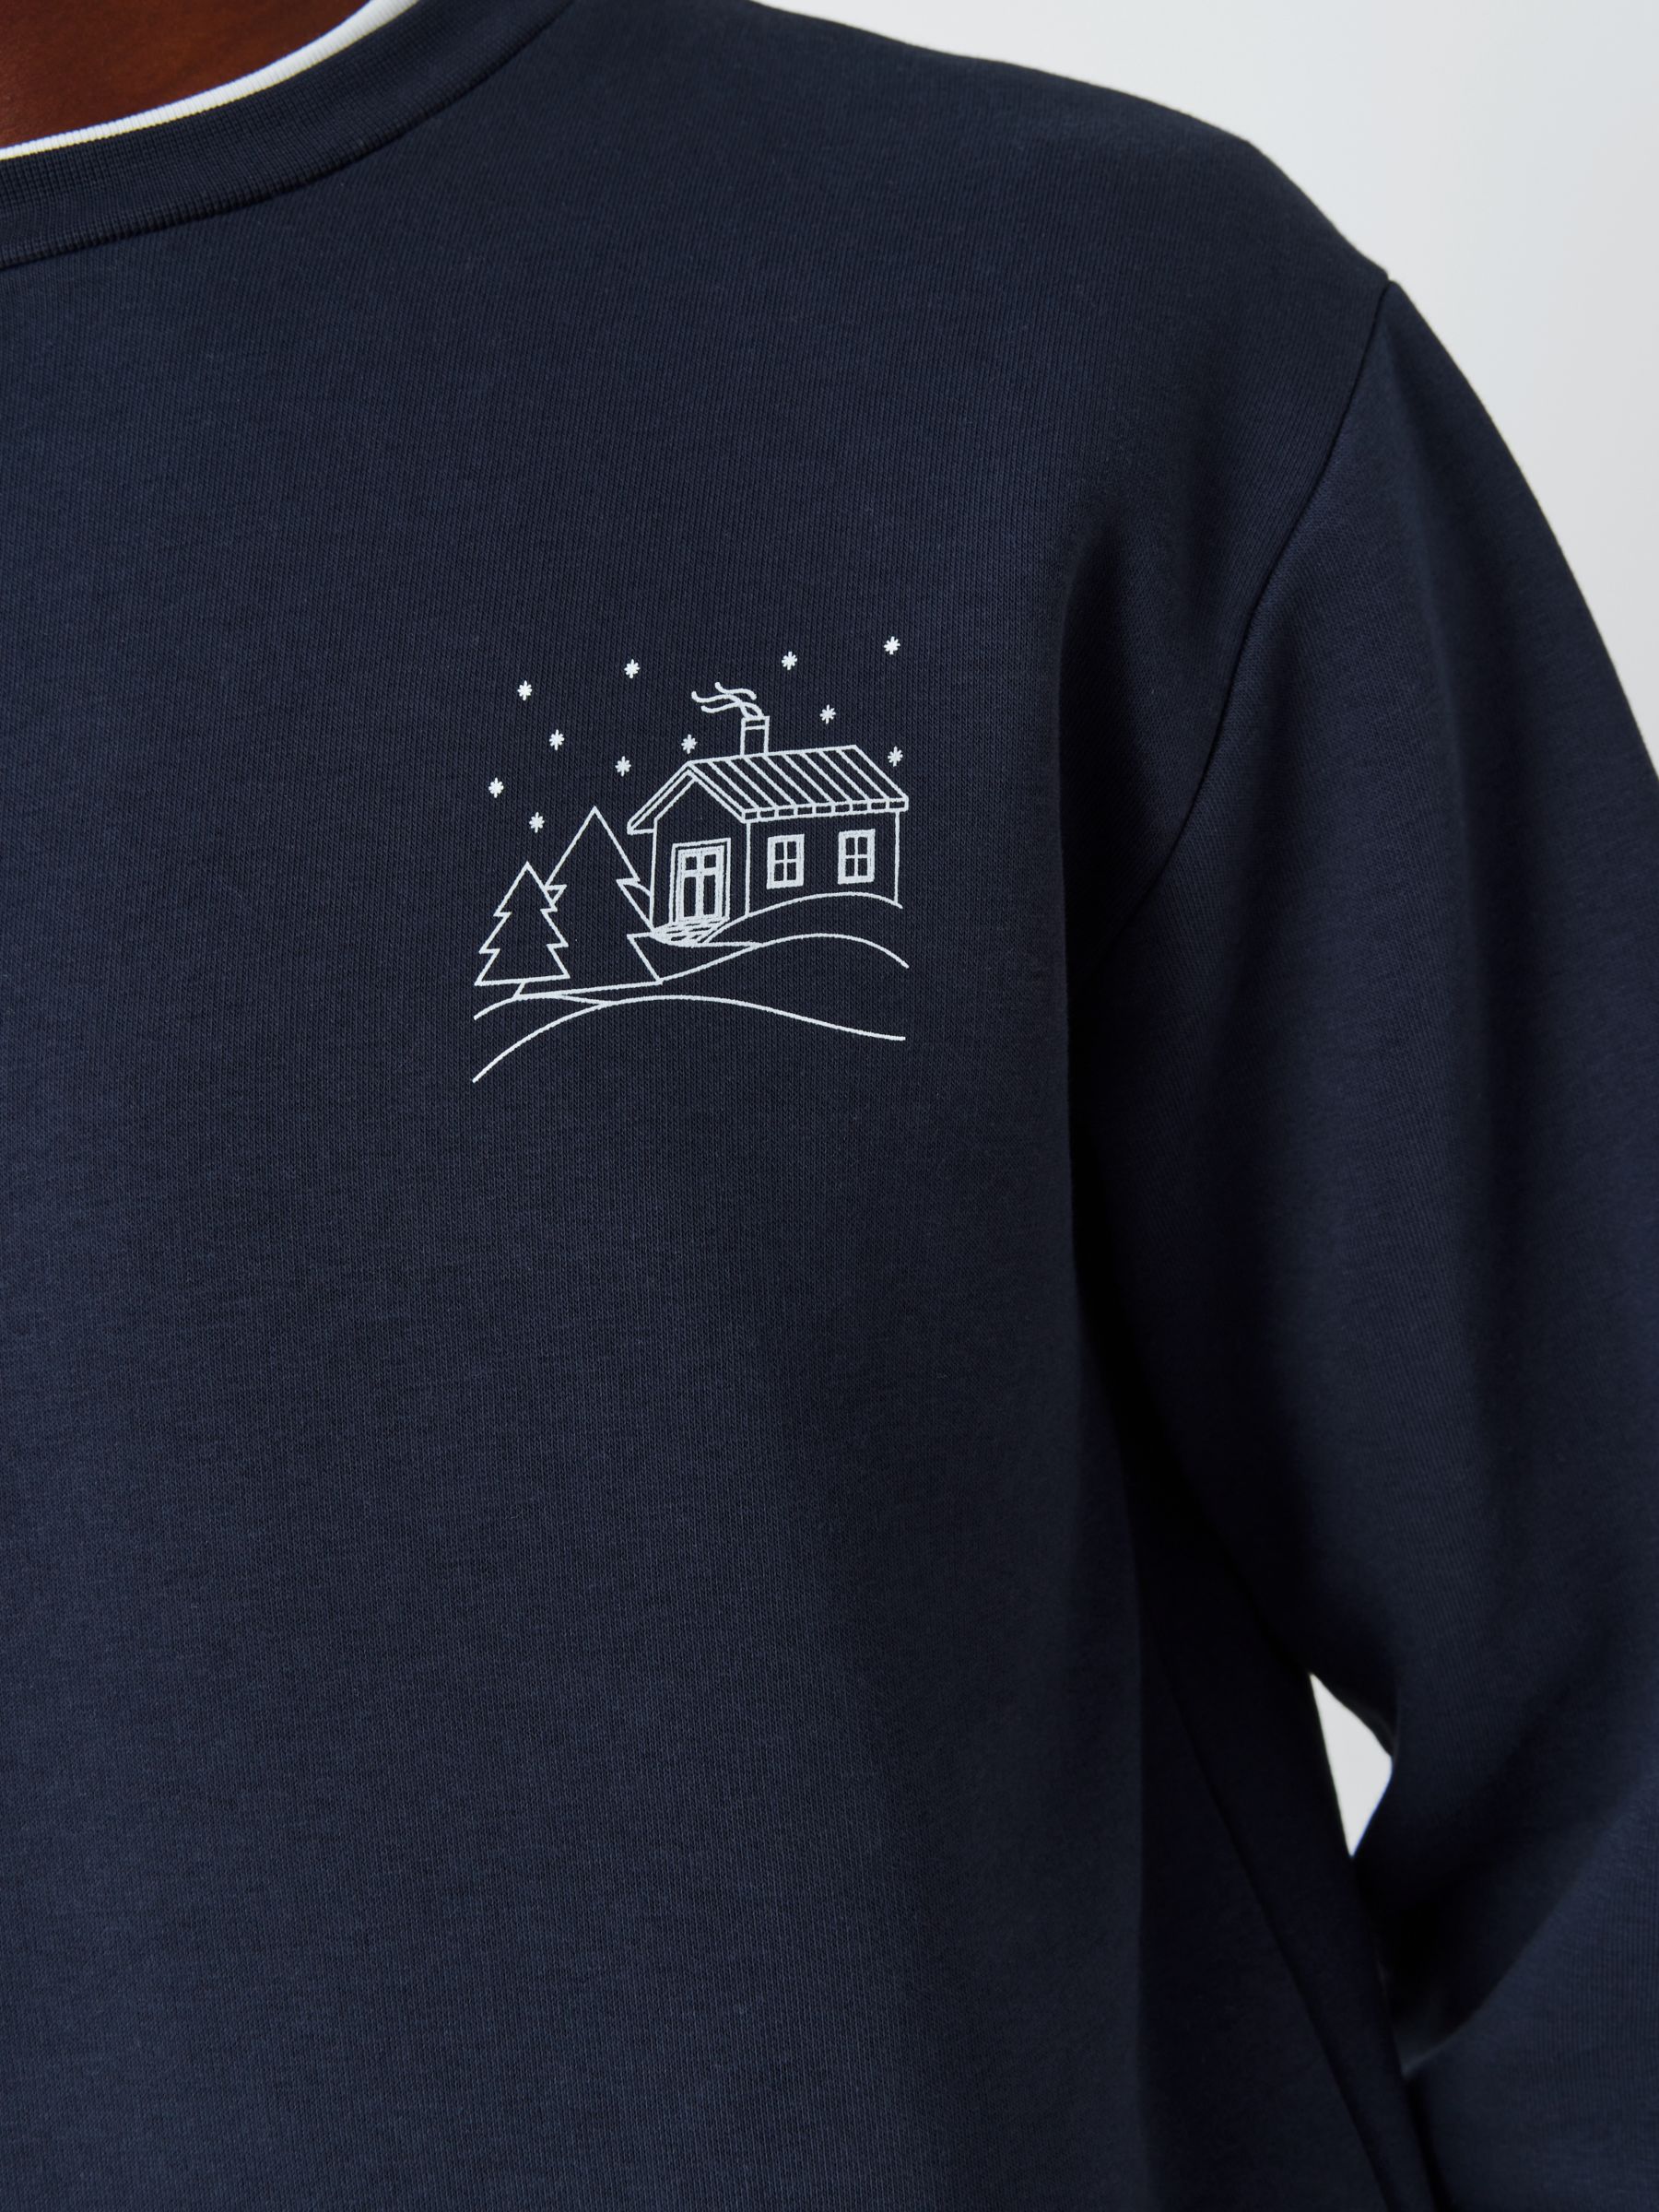 SELECTED HOMME Christmas Logo Organic Cotton Blend Sweatshirt, Navy, L